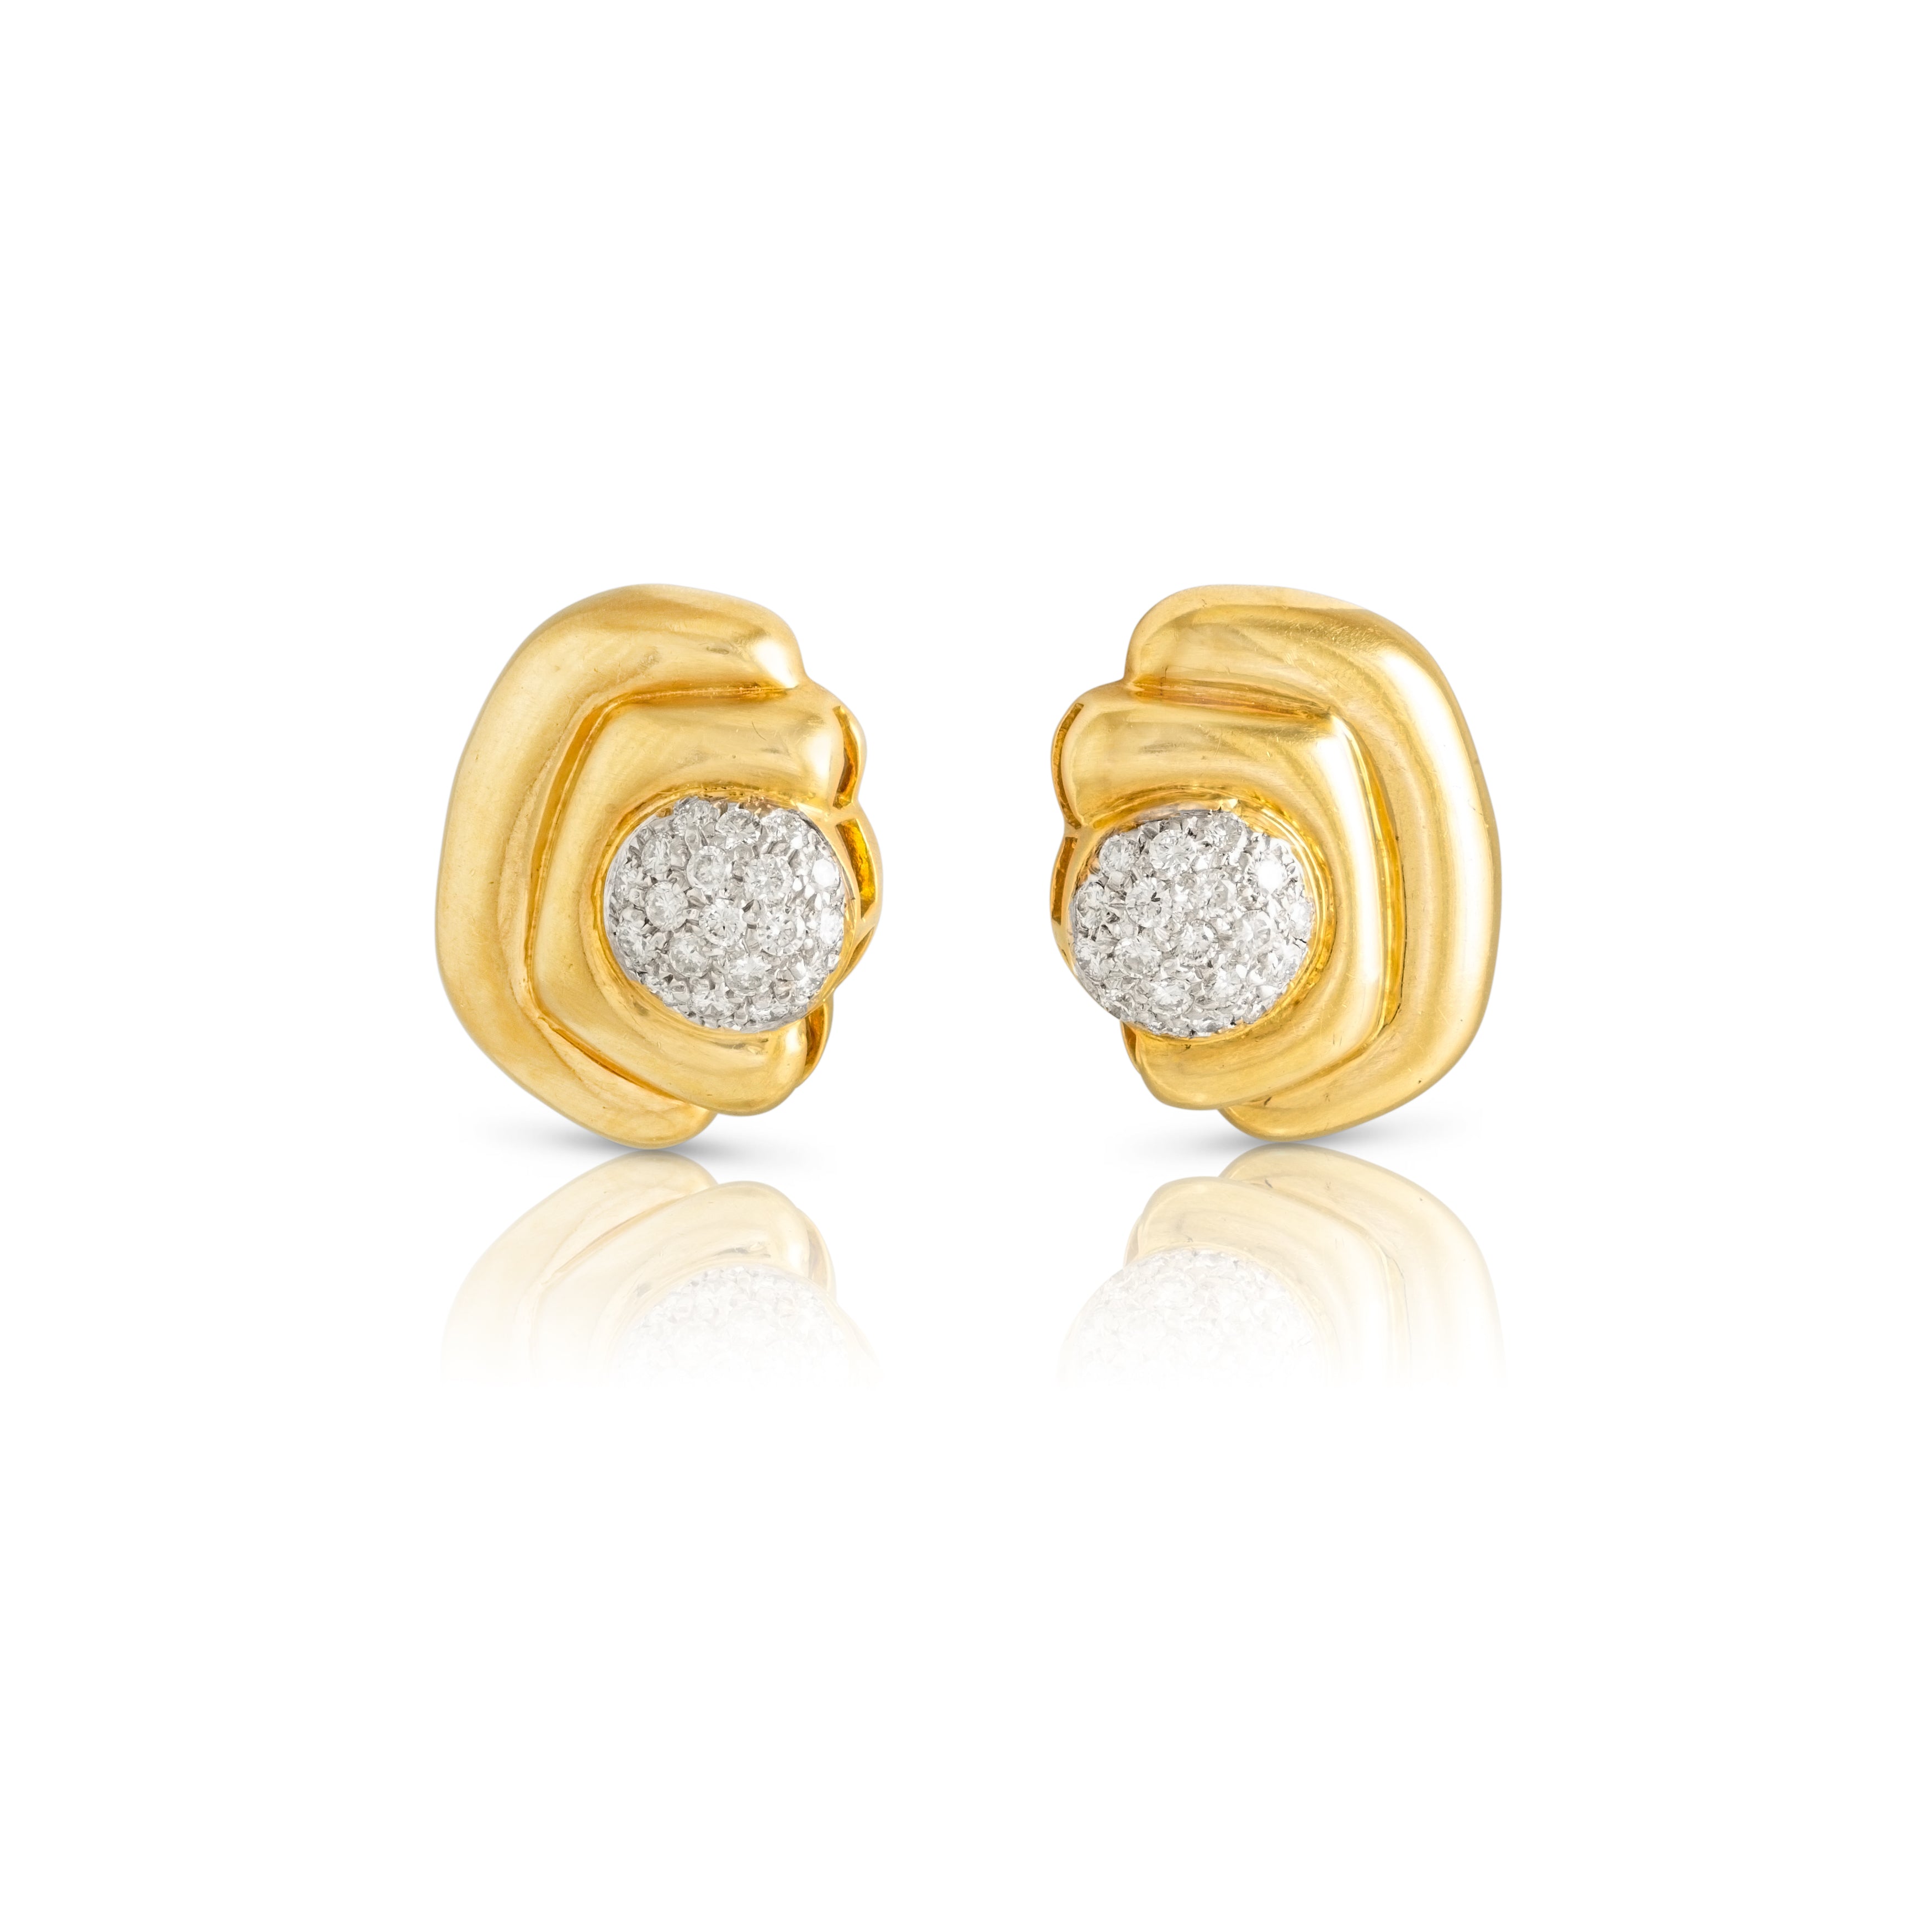 Vintage yellow gold diamond earrings with 1-carat diamond centres.